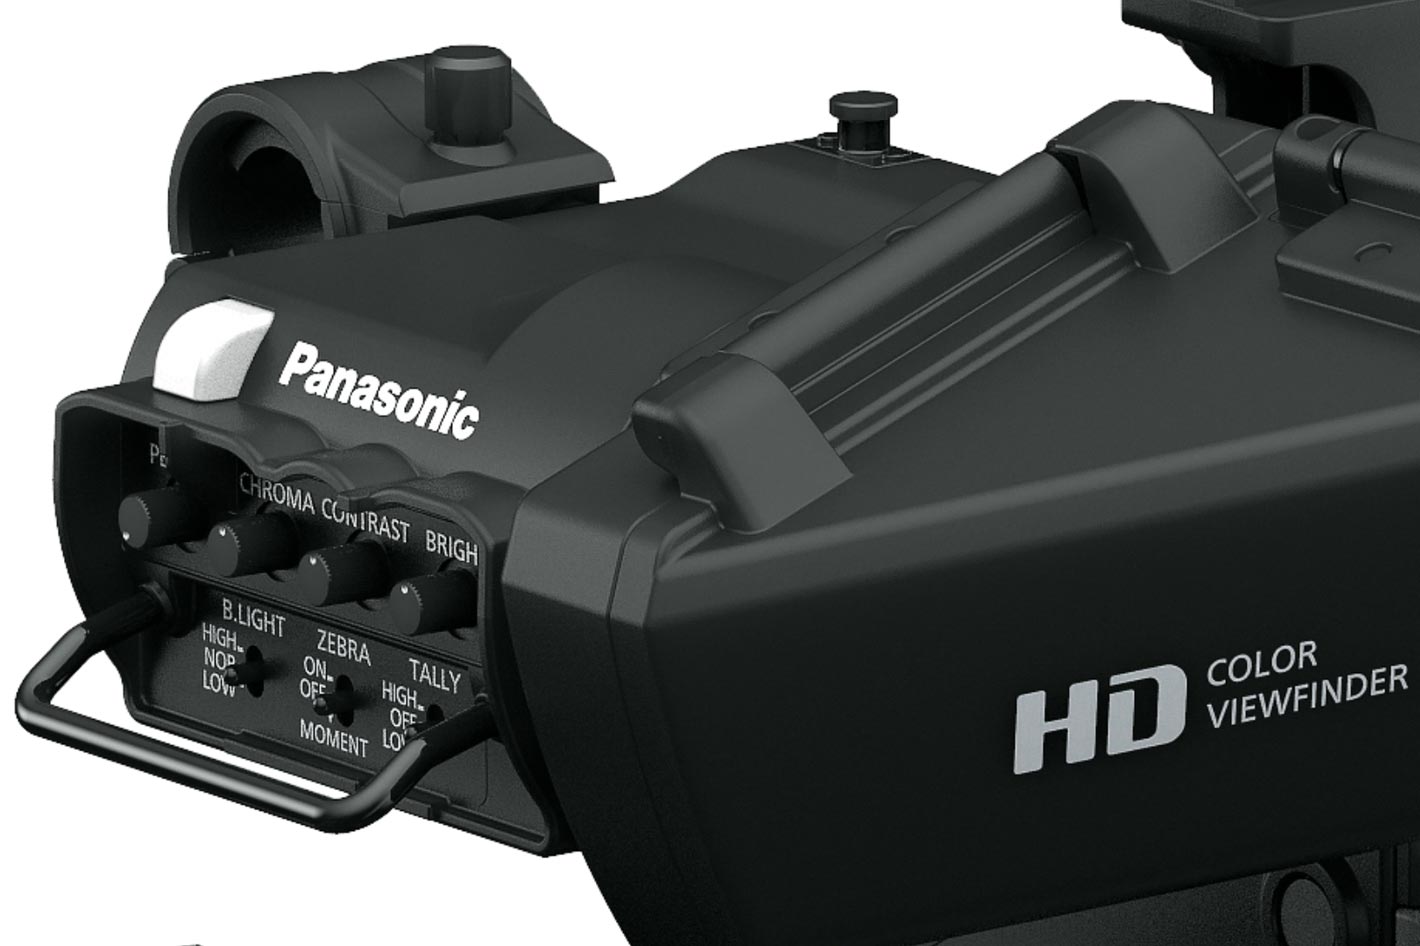 Panasonic AK-HC3900 a studio camera upgradable to native 4K